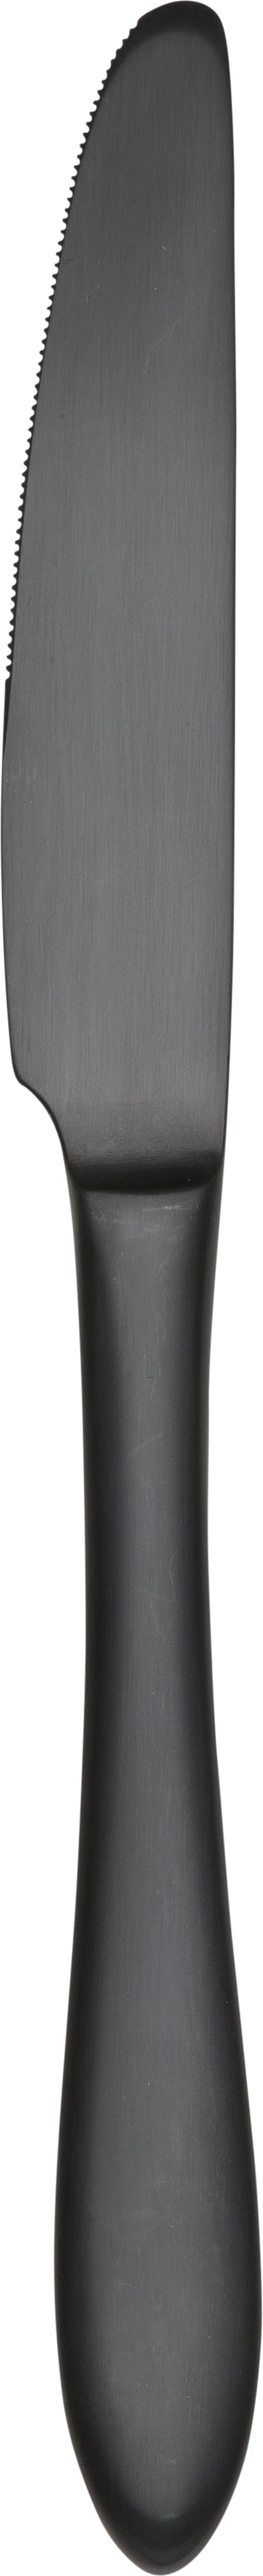 Øland bordkniv, sort, 22,7 cm